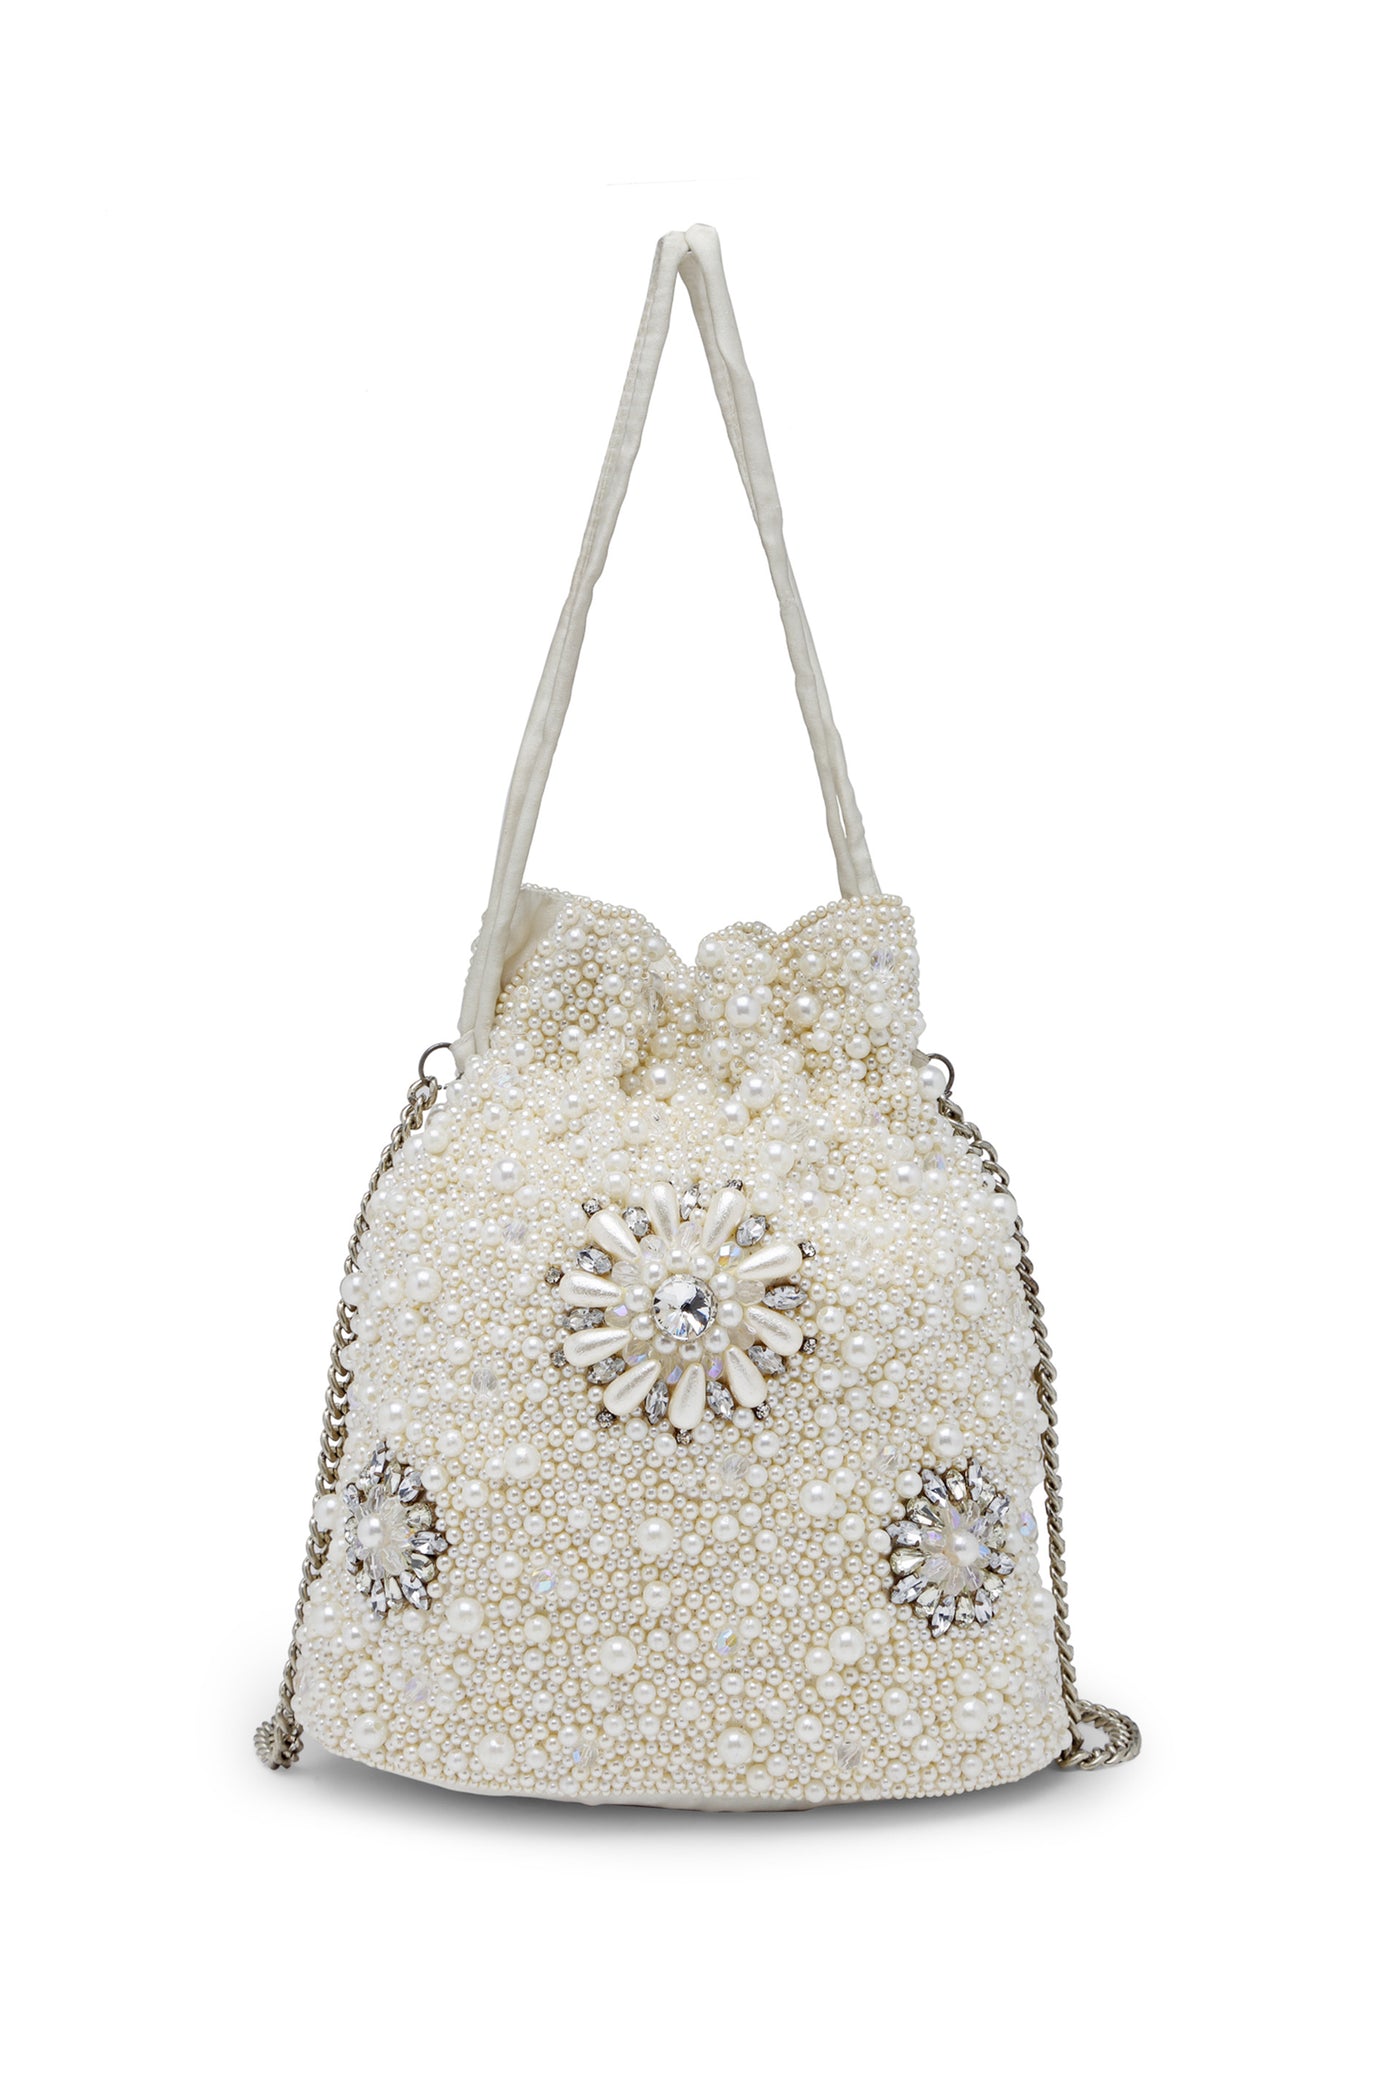 Bijoux by priya chandna Pearl Crystal Potli white fashion accessories indian designer wear online shopping melange singapore